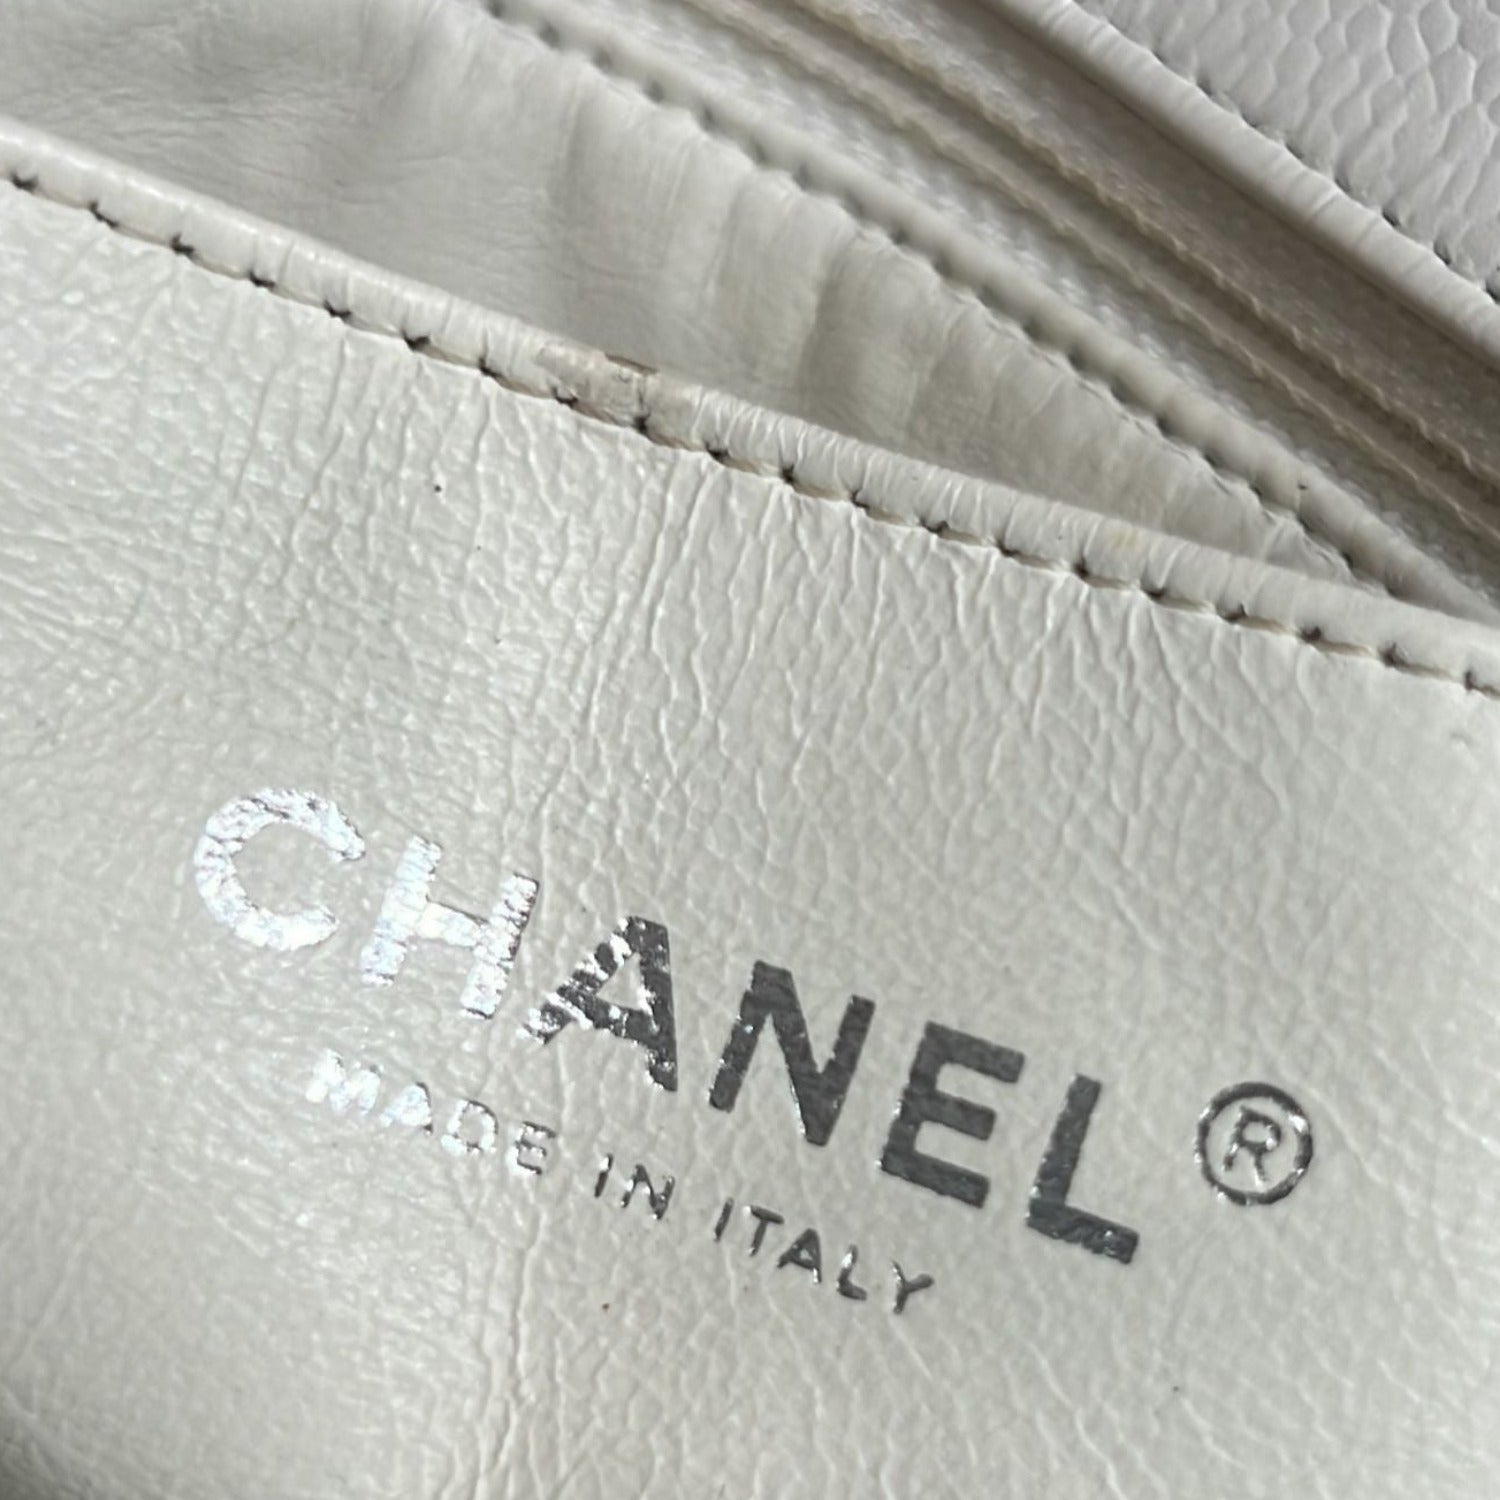 Chanel White Caviar 10 Classic Flap Bag